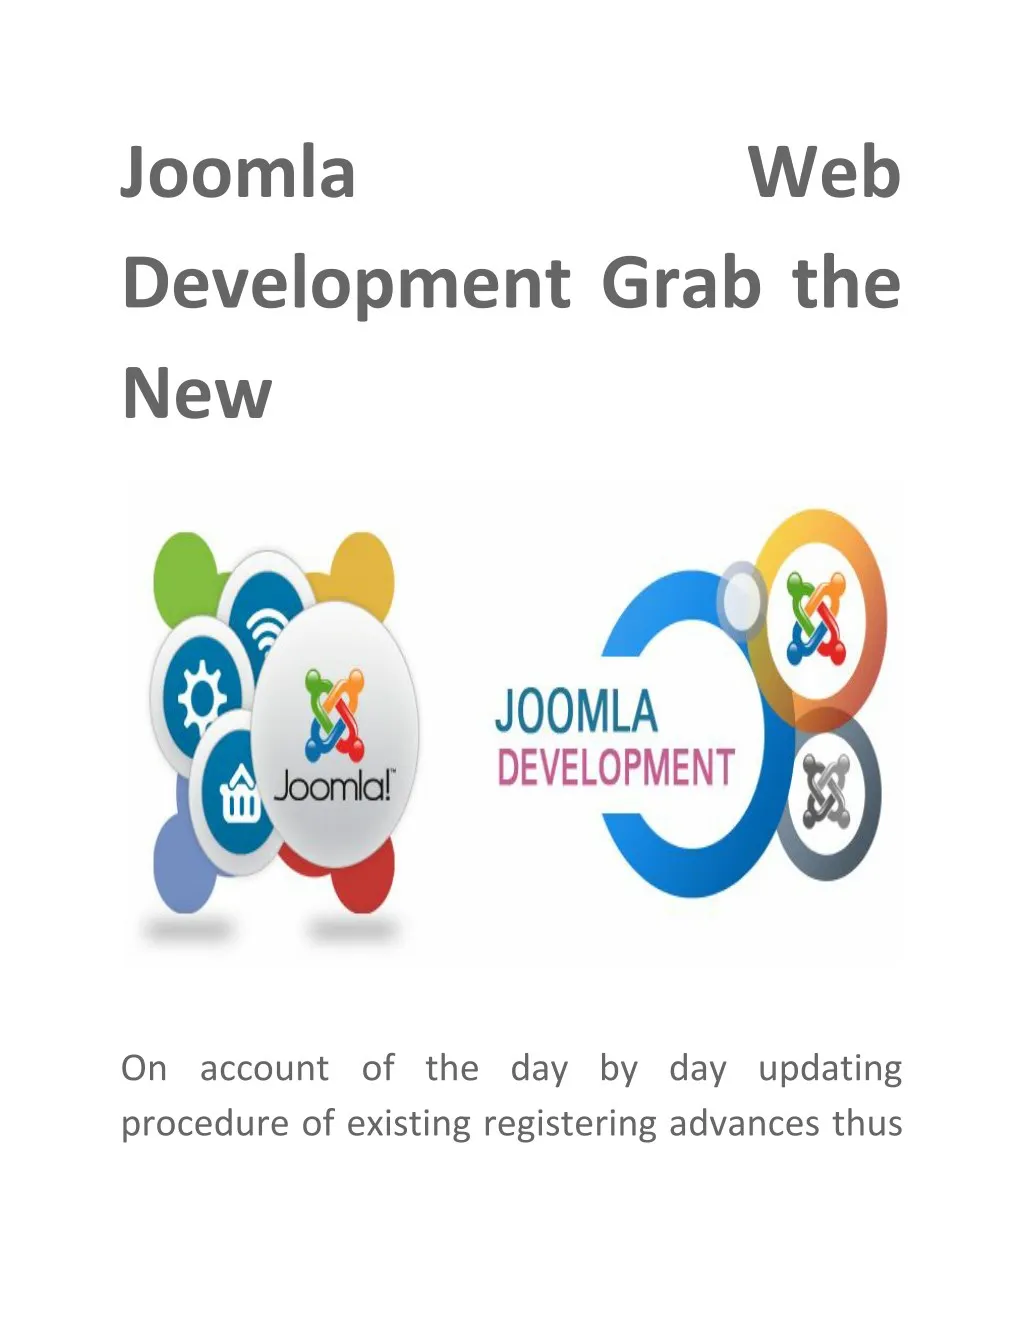 joomla development grab the new